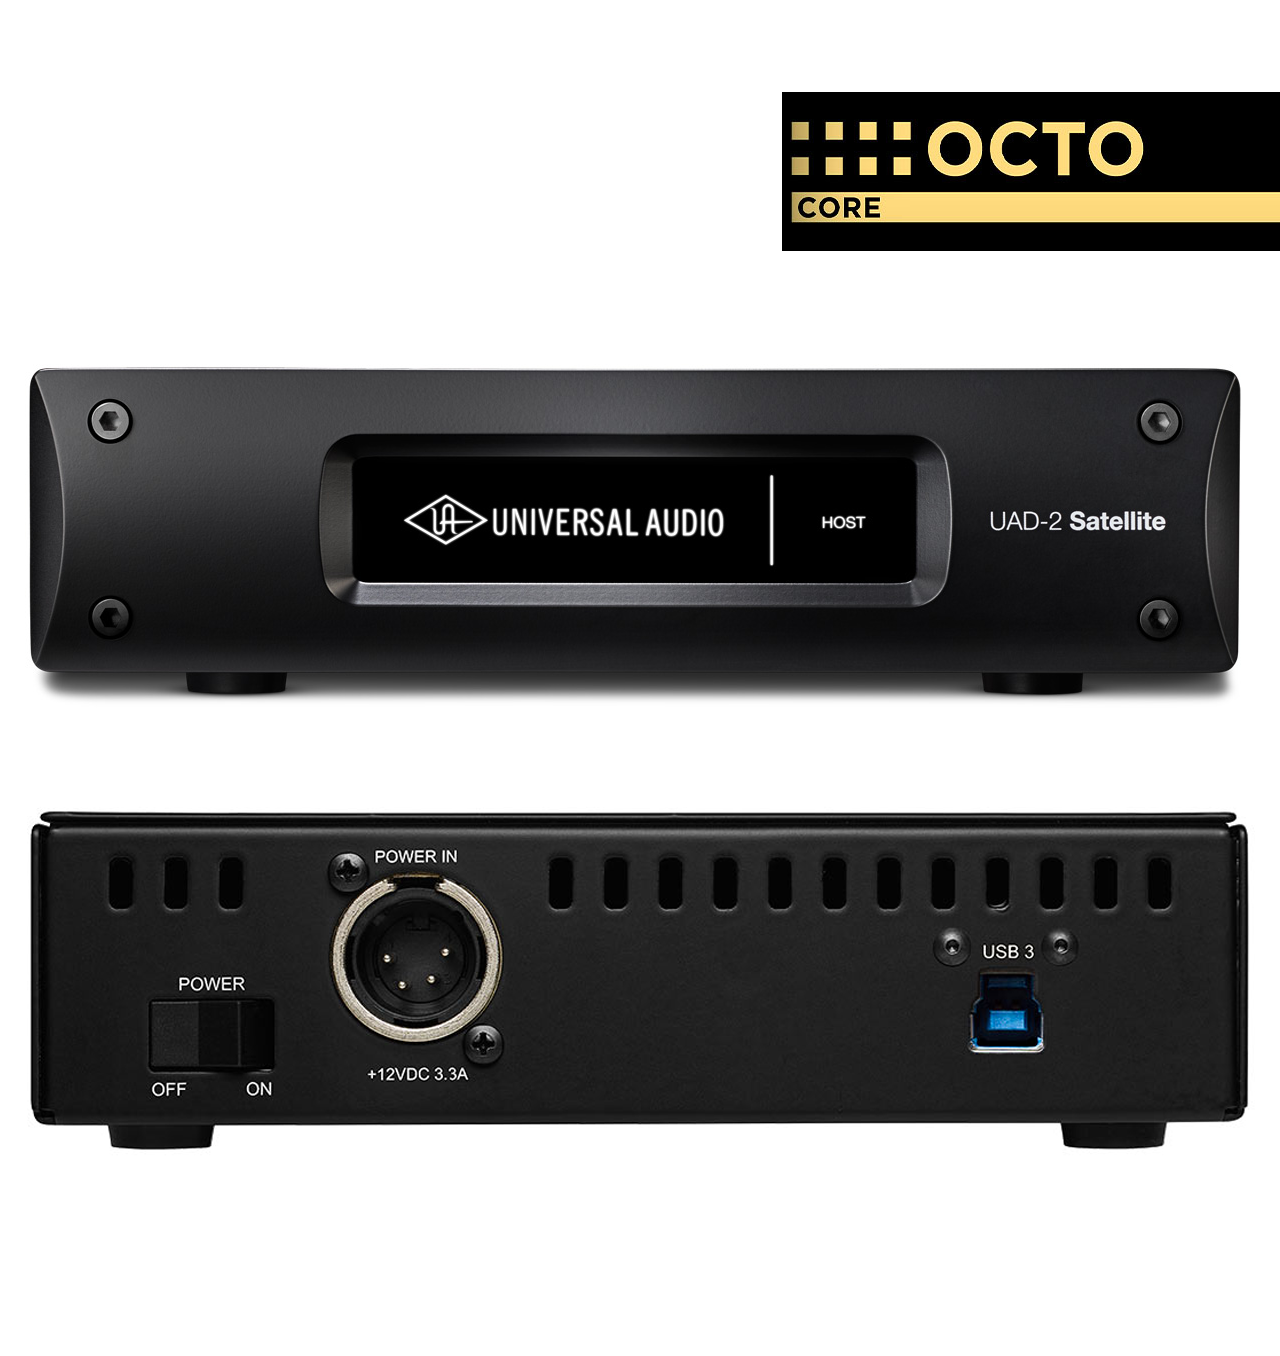 Universal audio UAD-2 Satellite USB OCTO Core Usb audio interface